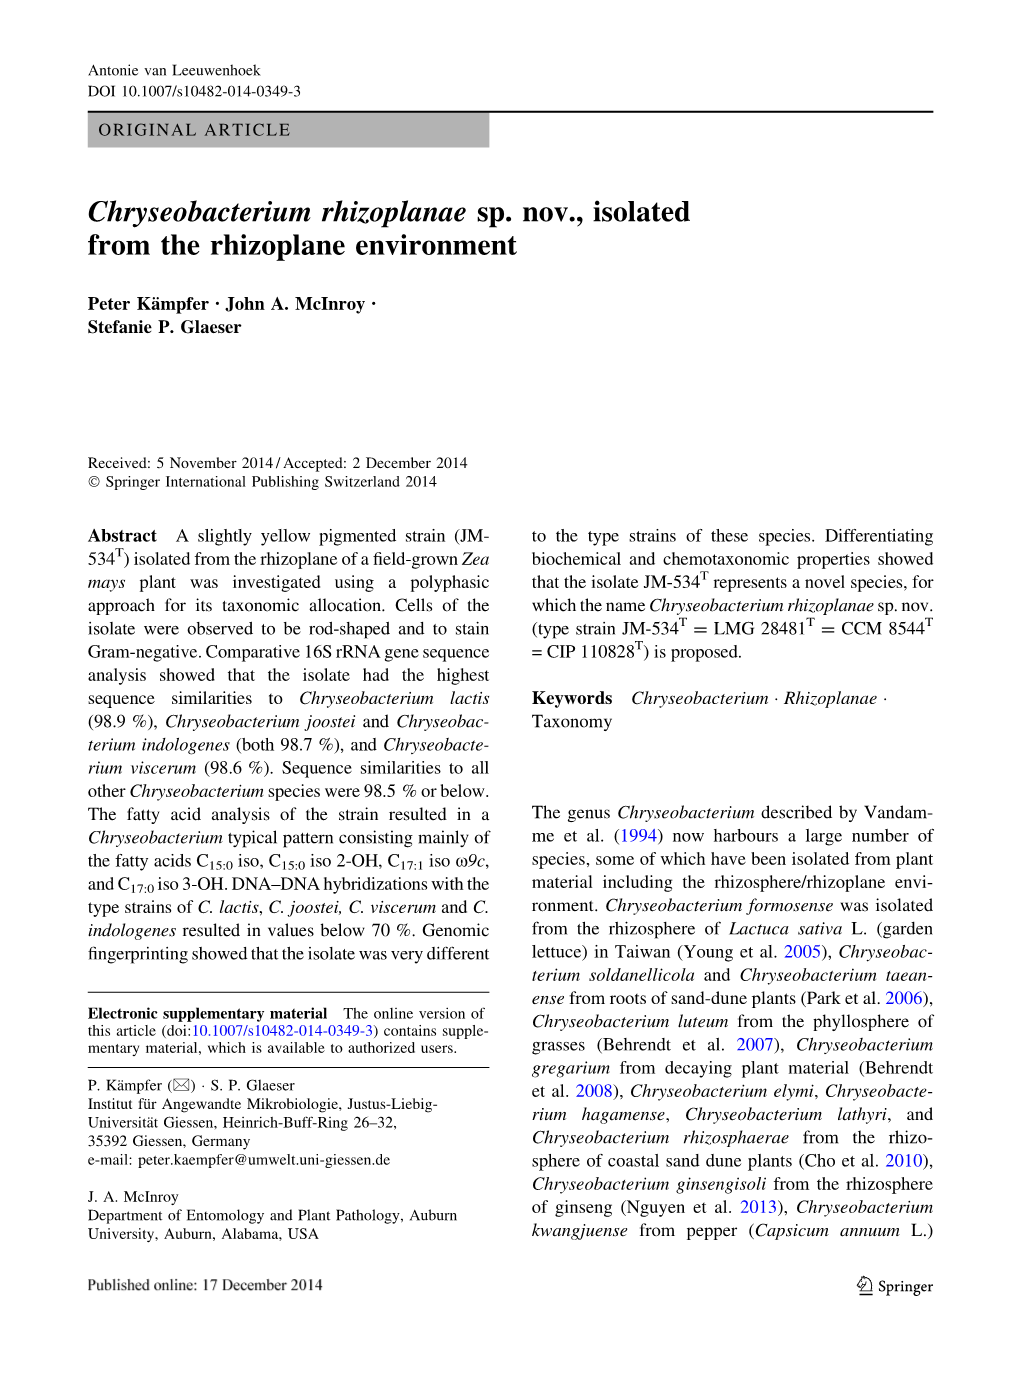 Chryseobacterium Rhizoplanae Sp. Nov., Isolated from the Rhizoplane Environment